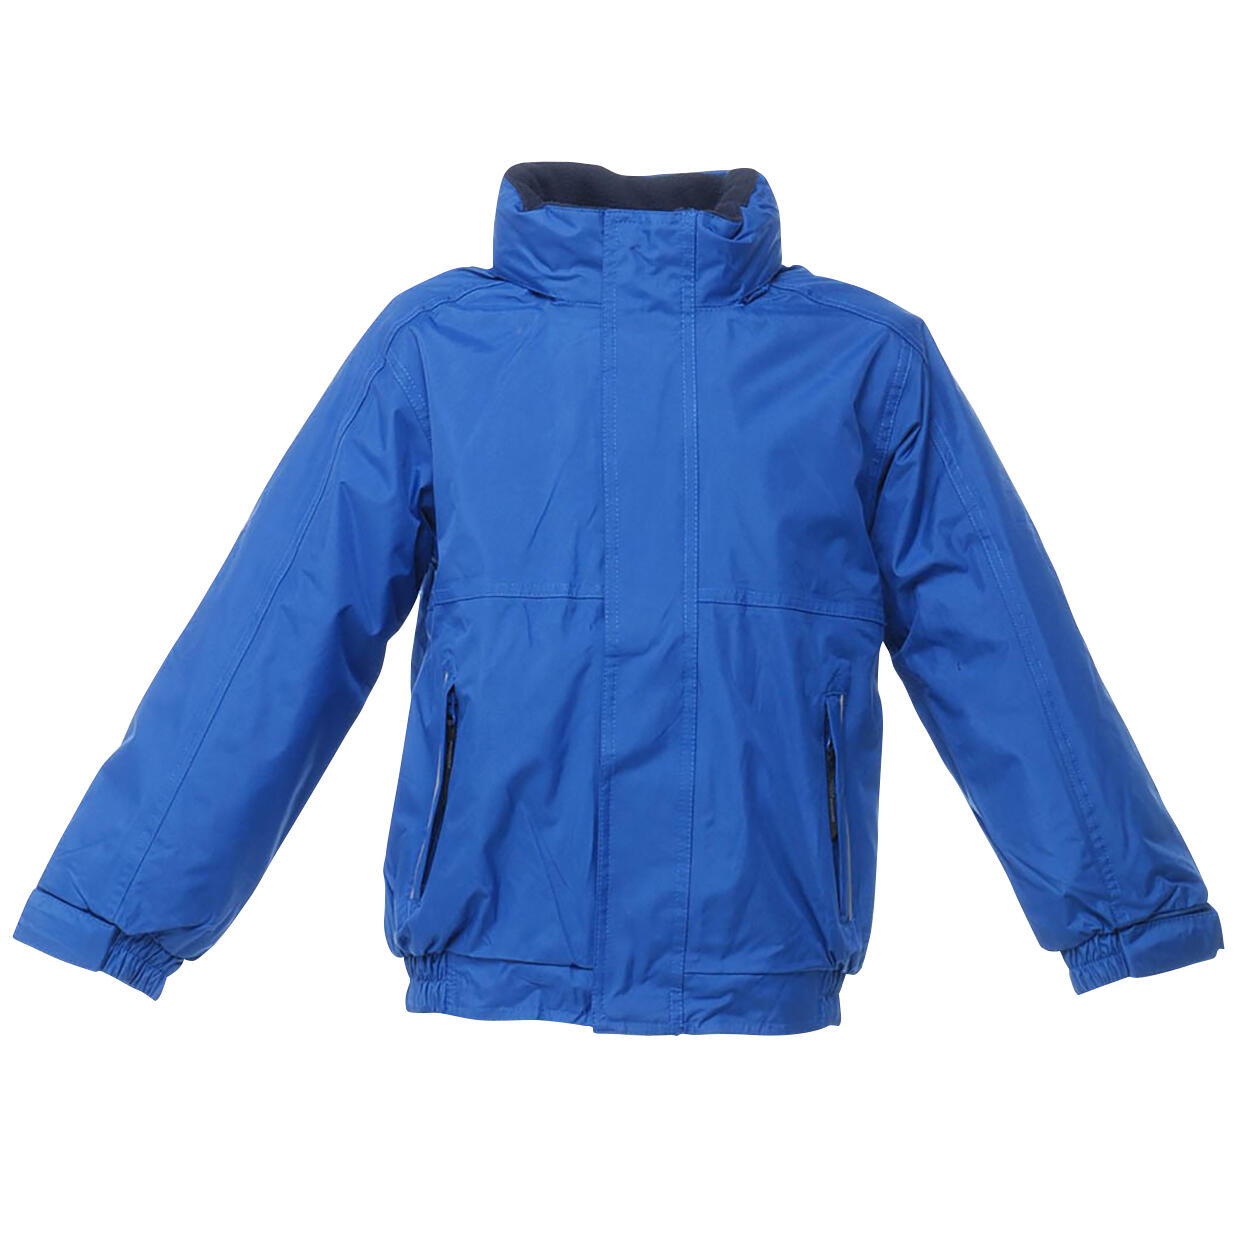 Kids/Childrens Waterproof Windproof Dover Jacket (Royal Blue/Navy) 1/5